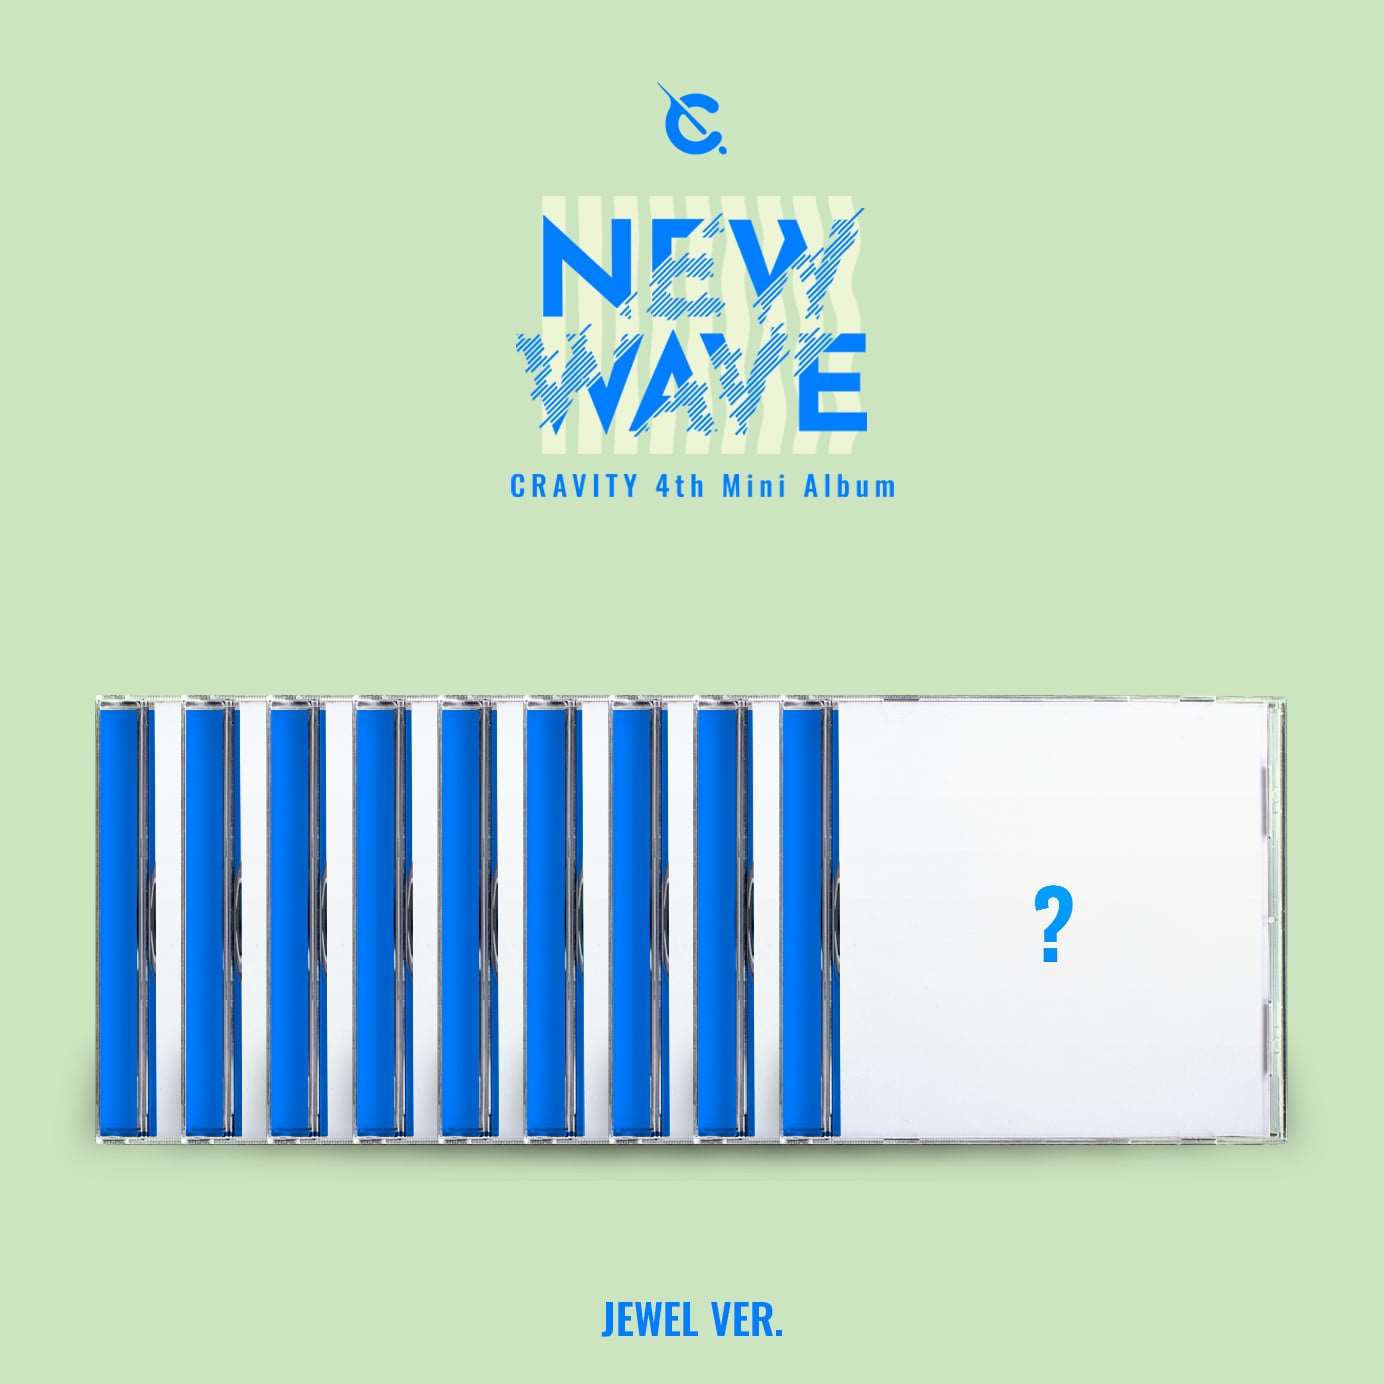 CRAVITY - 4th Mini Album [NEW WAVE] (Jewel Ver.) (Limited Edition)